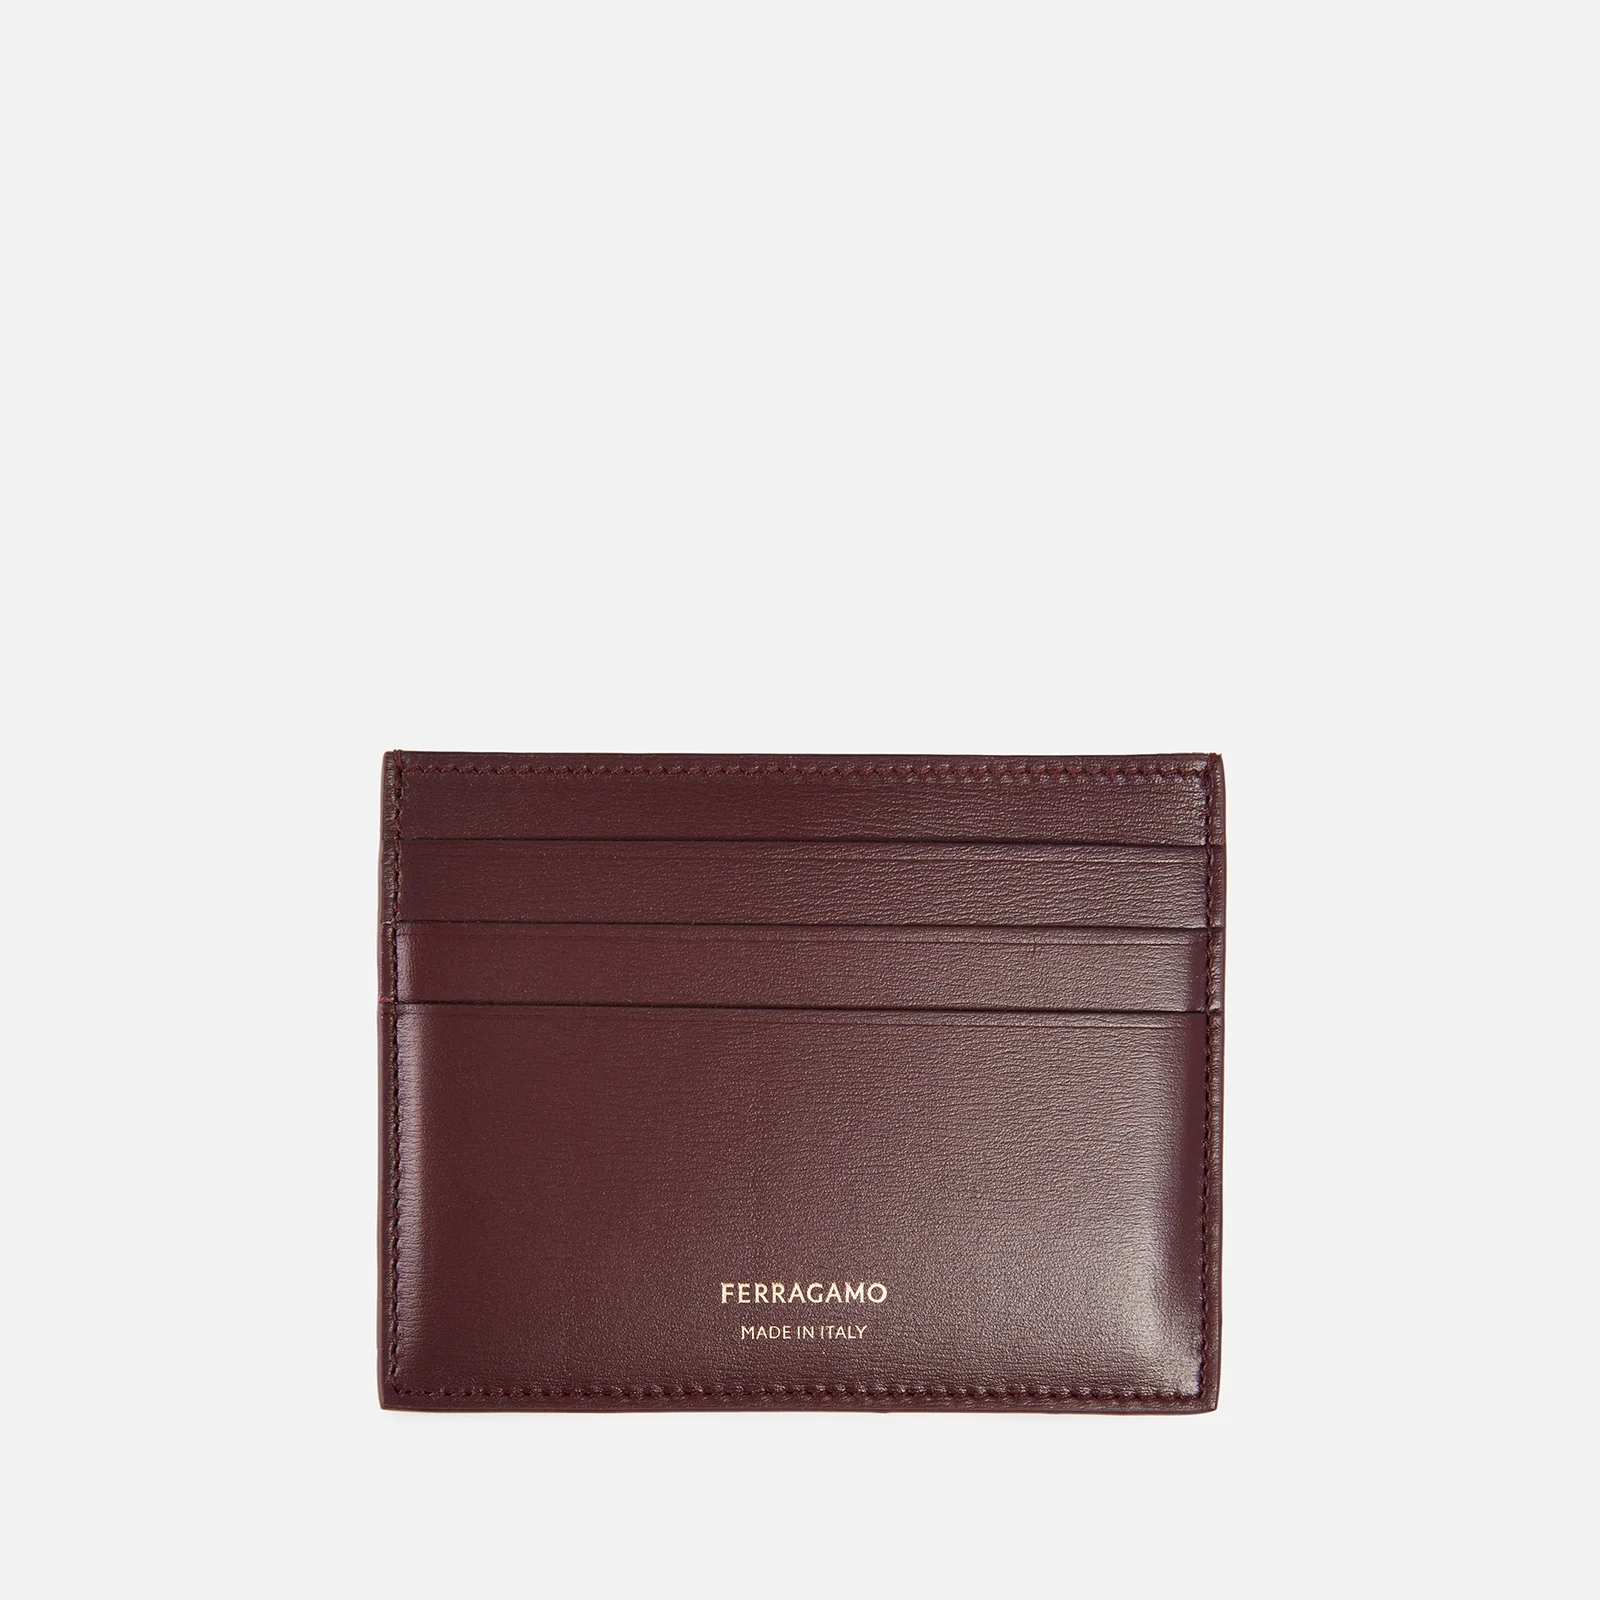 Ferragamo Classic Leather Cardholder Image 1